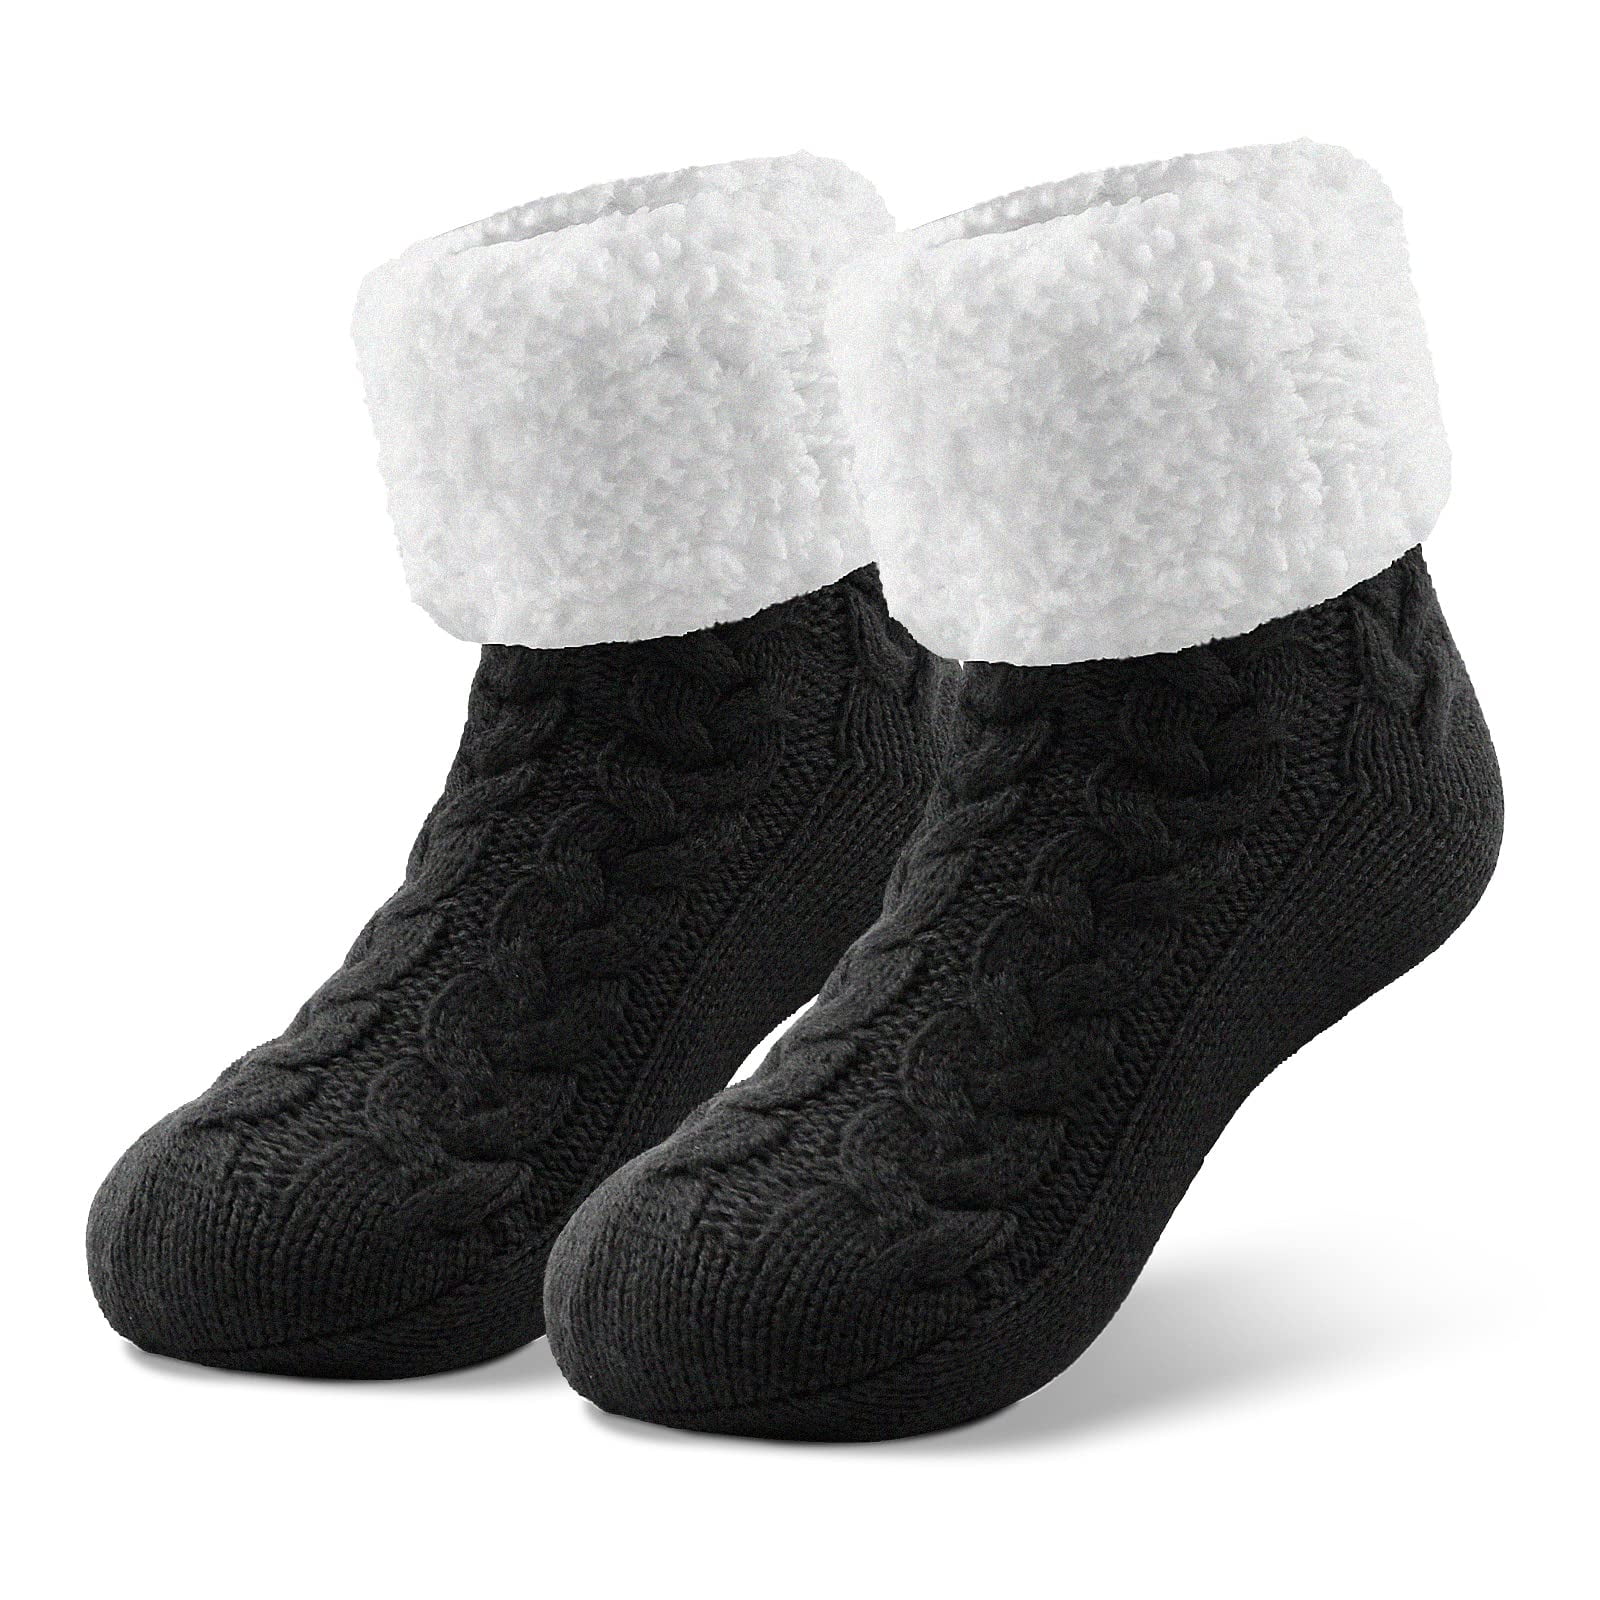 Women's cuddly socks,non-slip stopper socks,winter socks,with ABS sole and  warm cottage socks,house socks,1 pair 